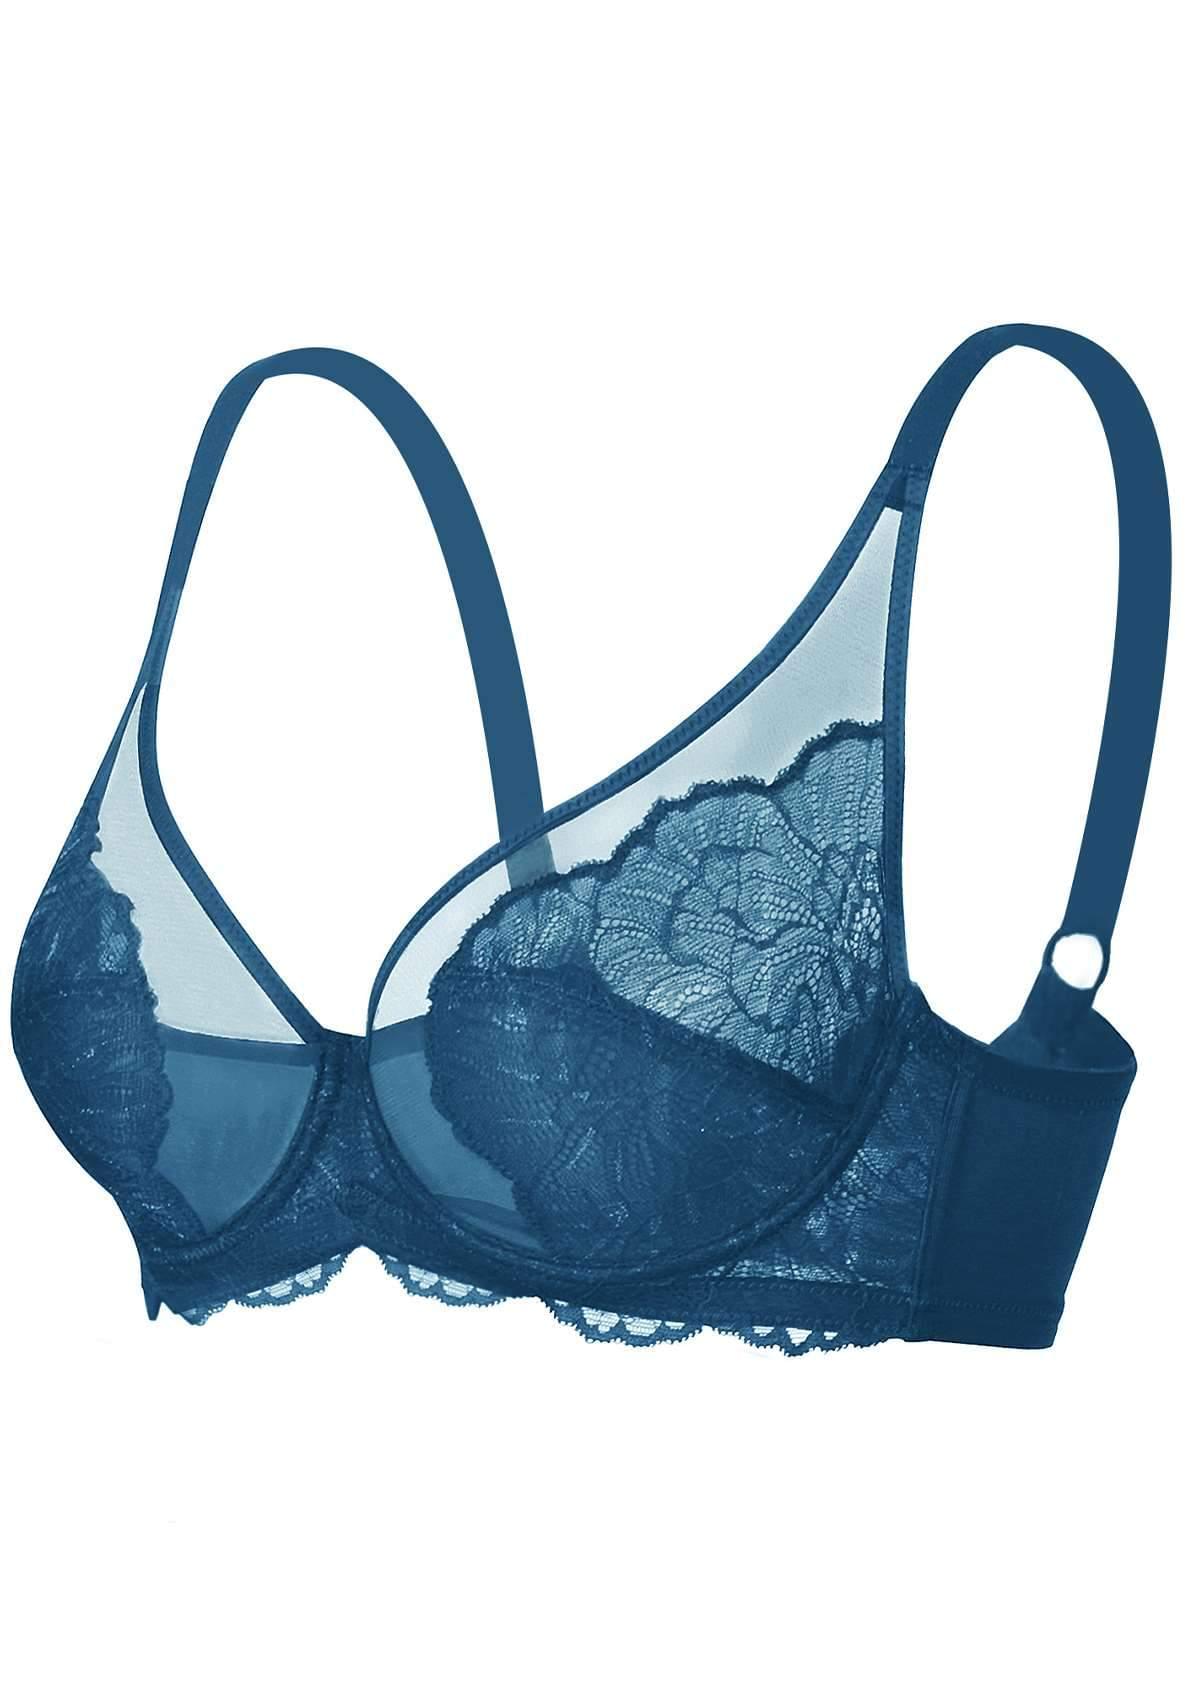 HSIA Blossom Lace Bra And Underwear Sets: Comfortable Plus Size Bra - Biscay Blue / 40 / DDD/F